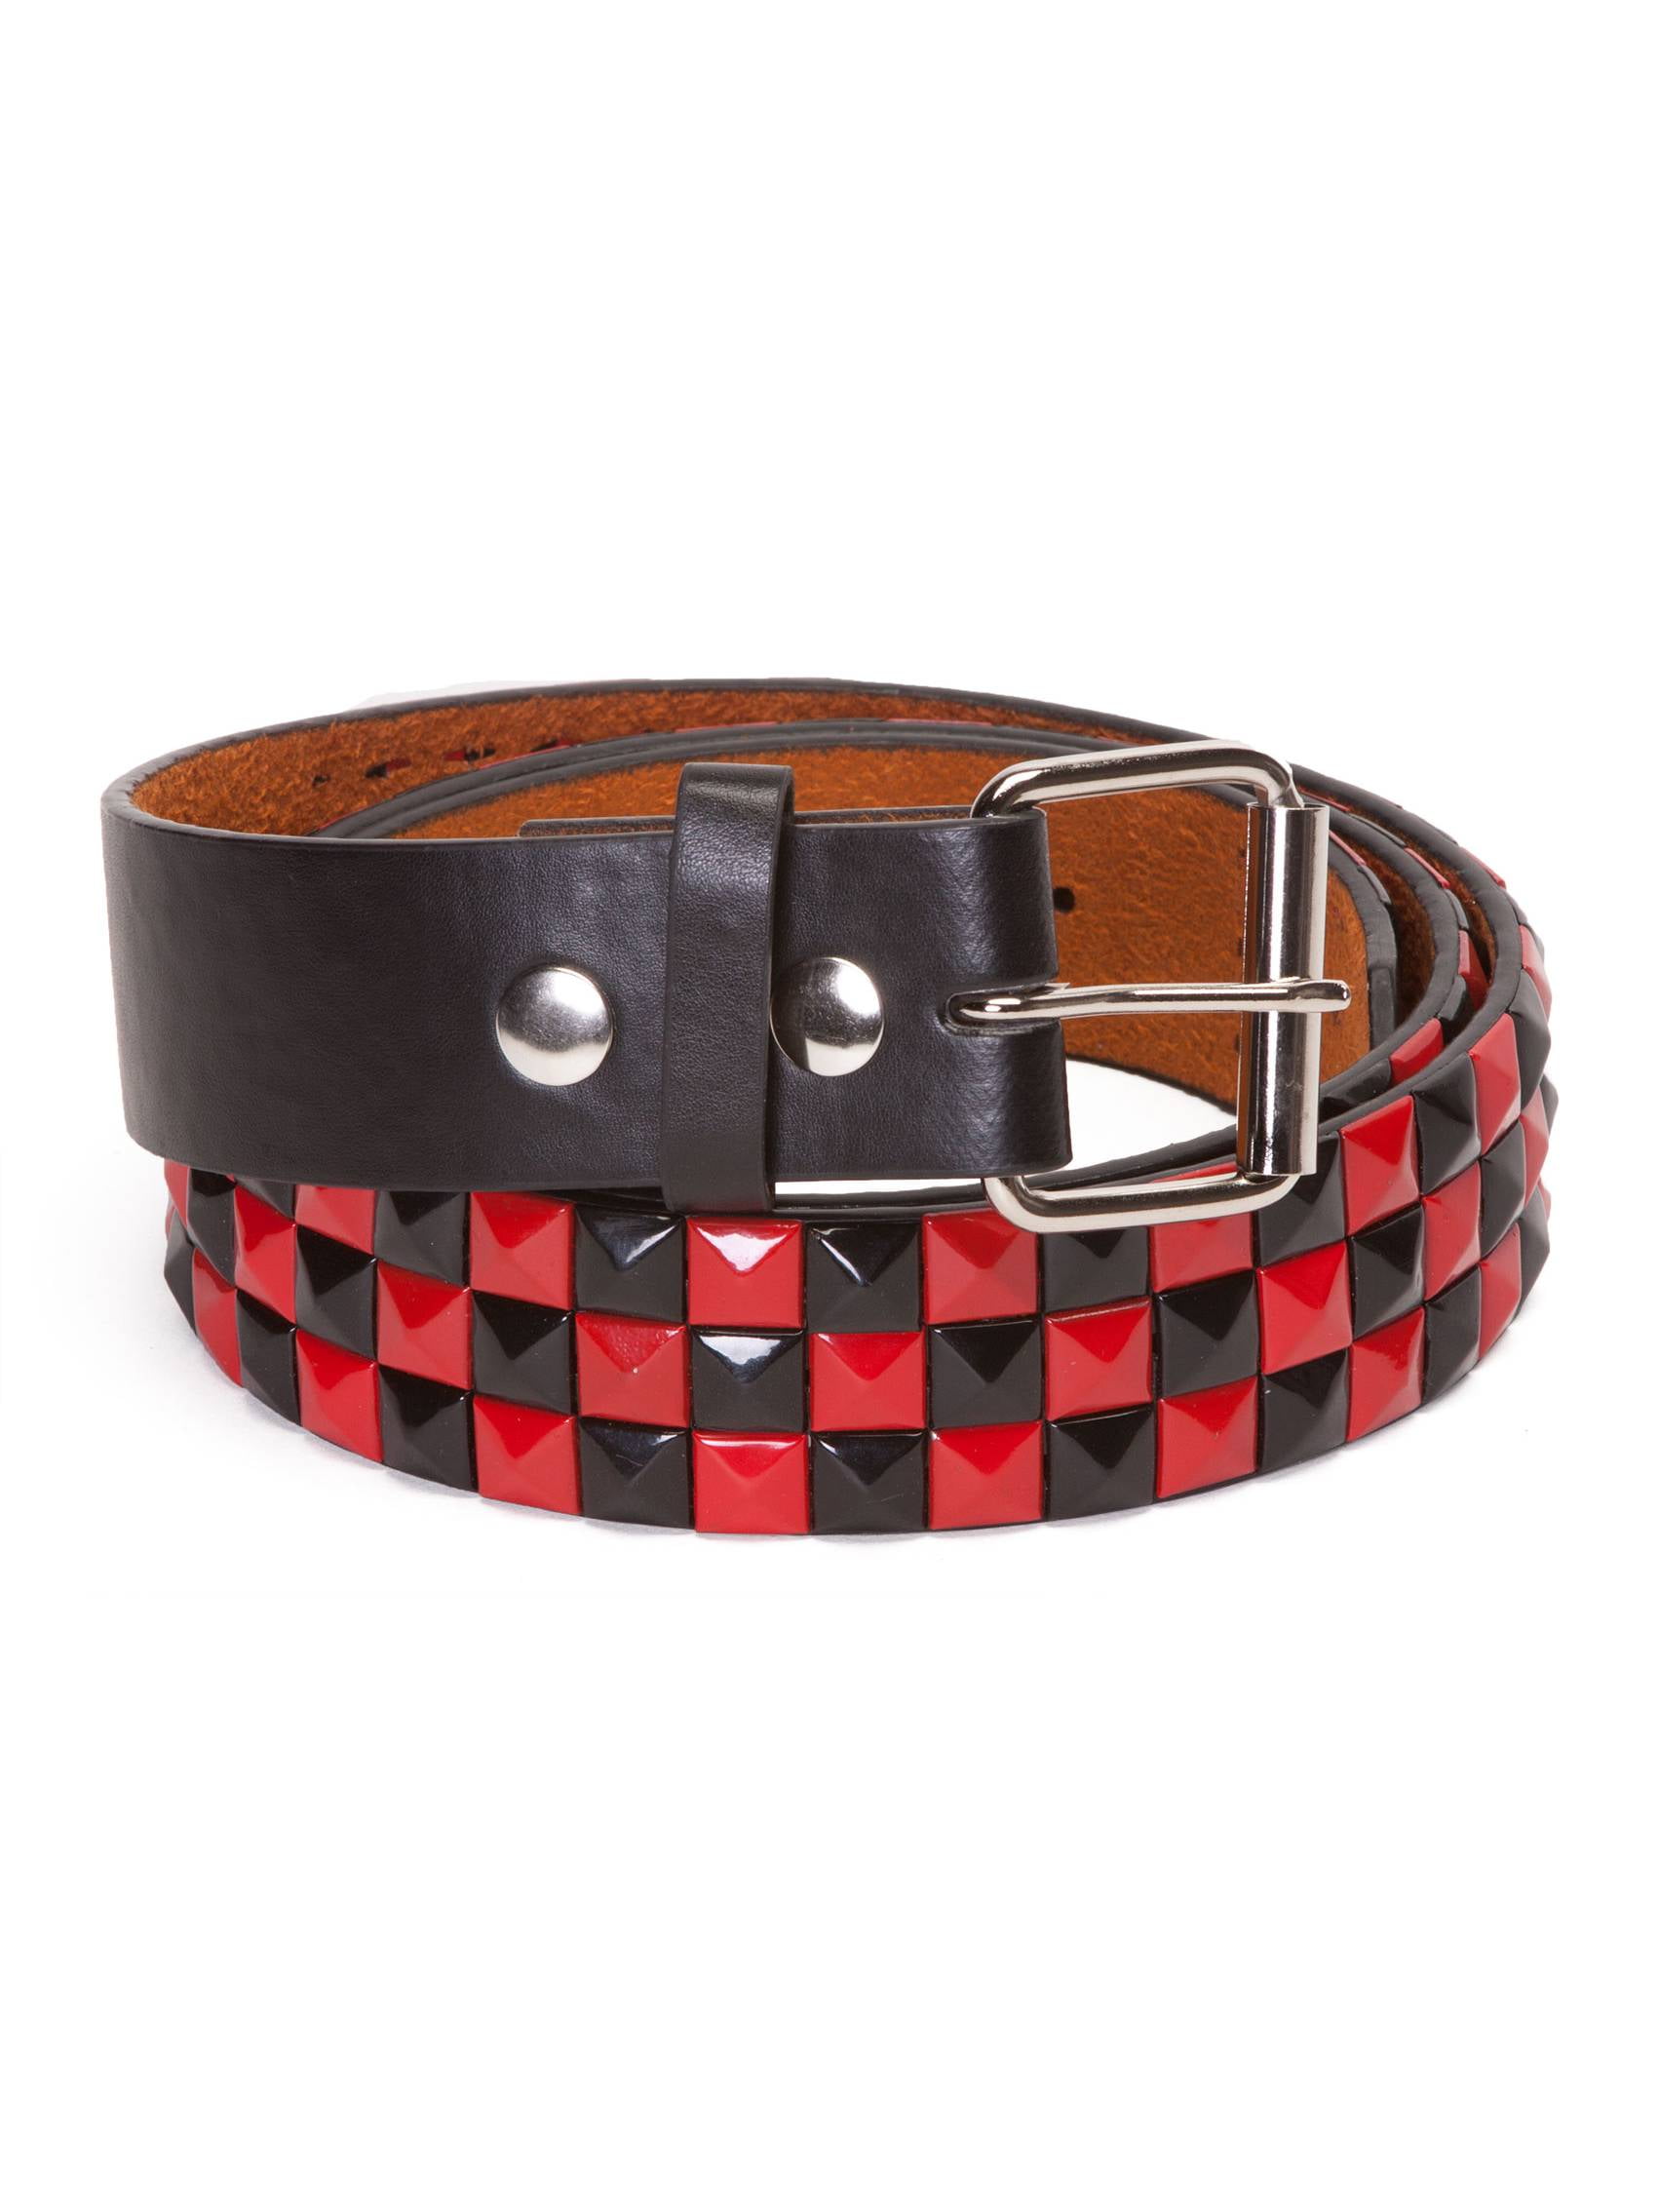 Clover - Studded Checker Board Pattern Leather Belt - Black/Red, Large ...